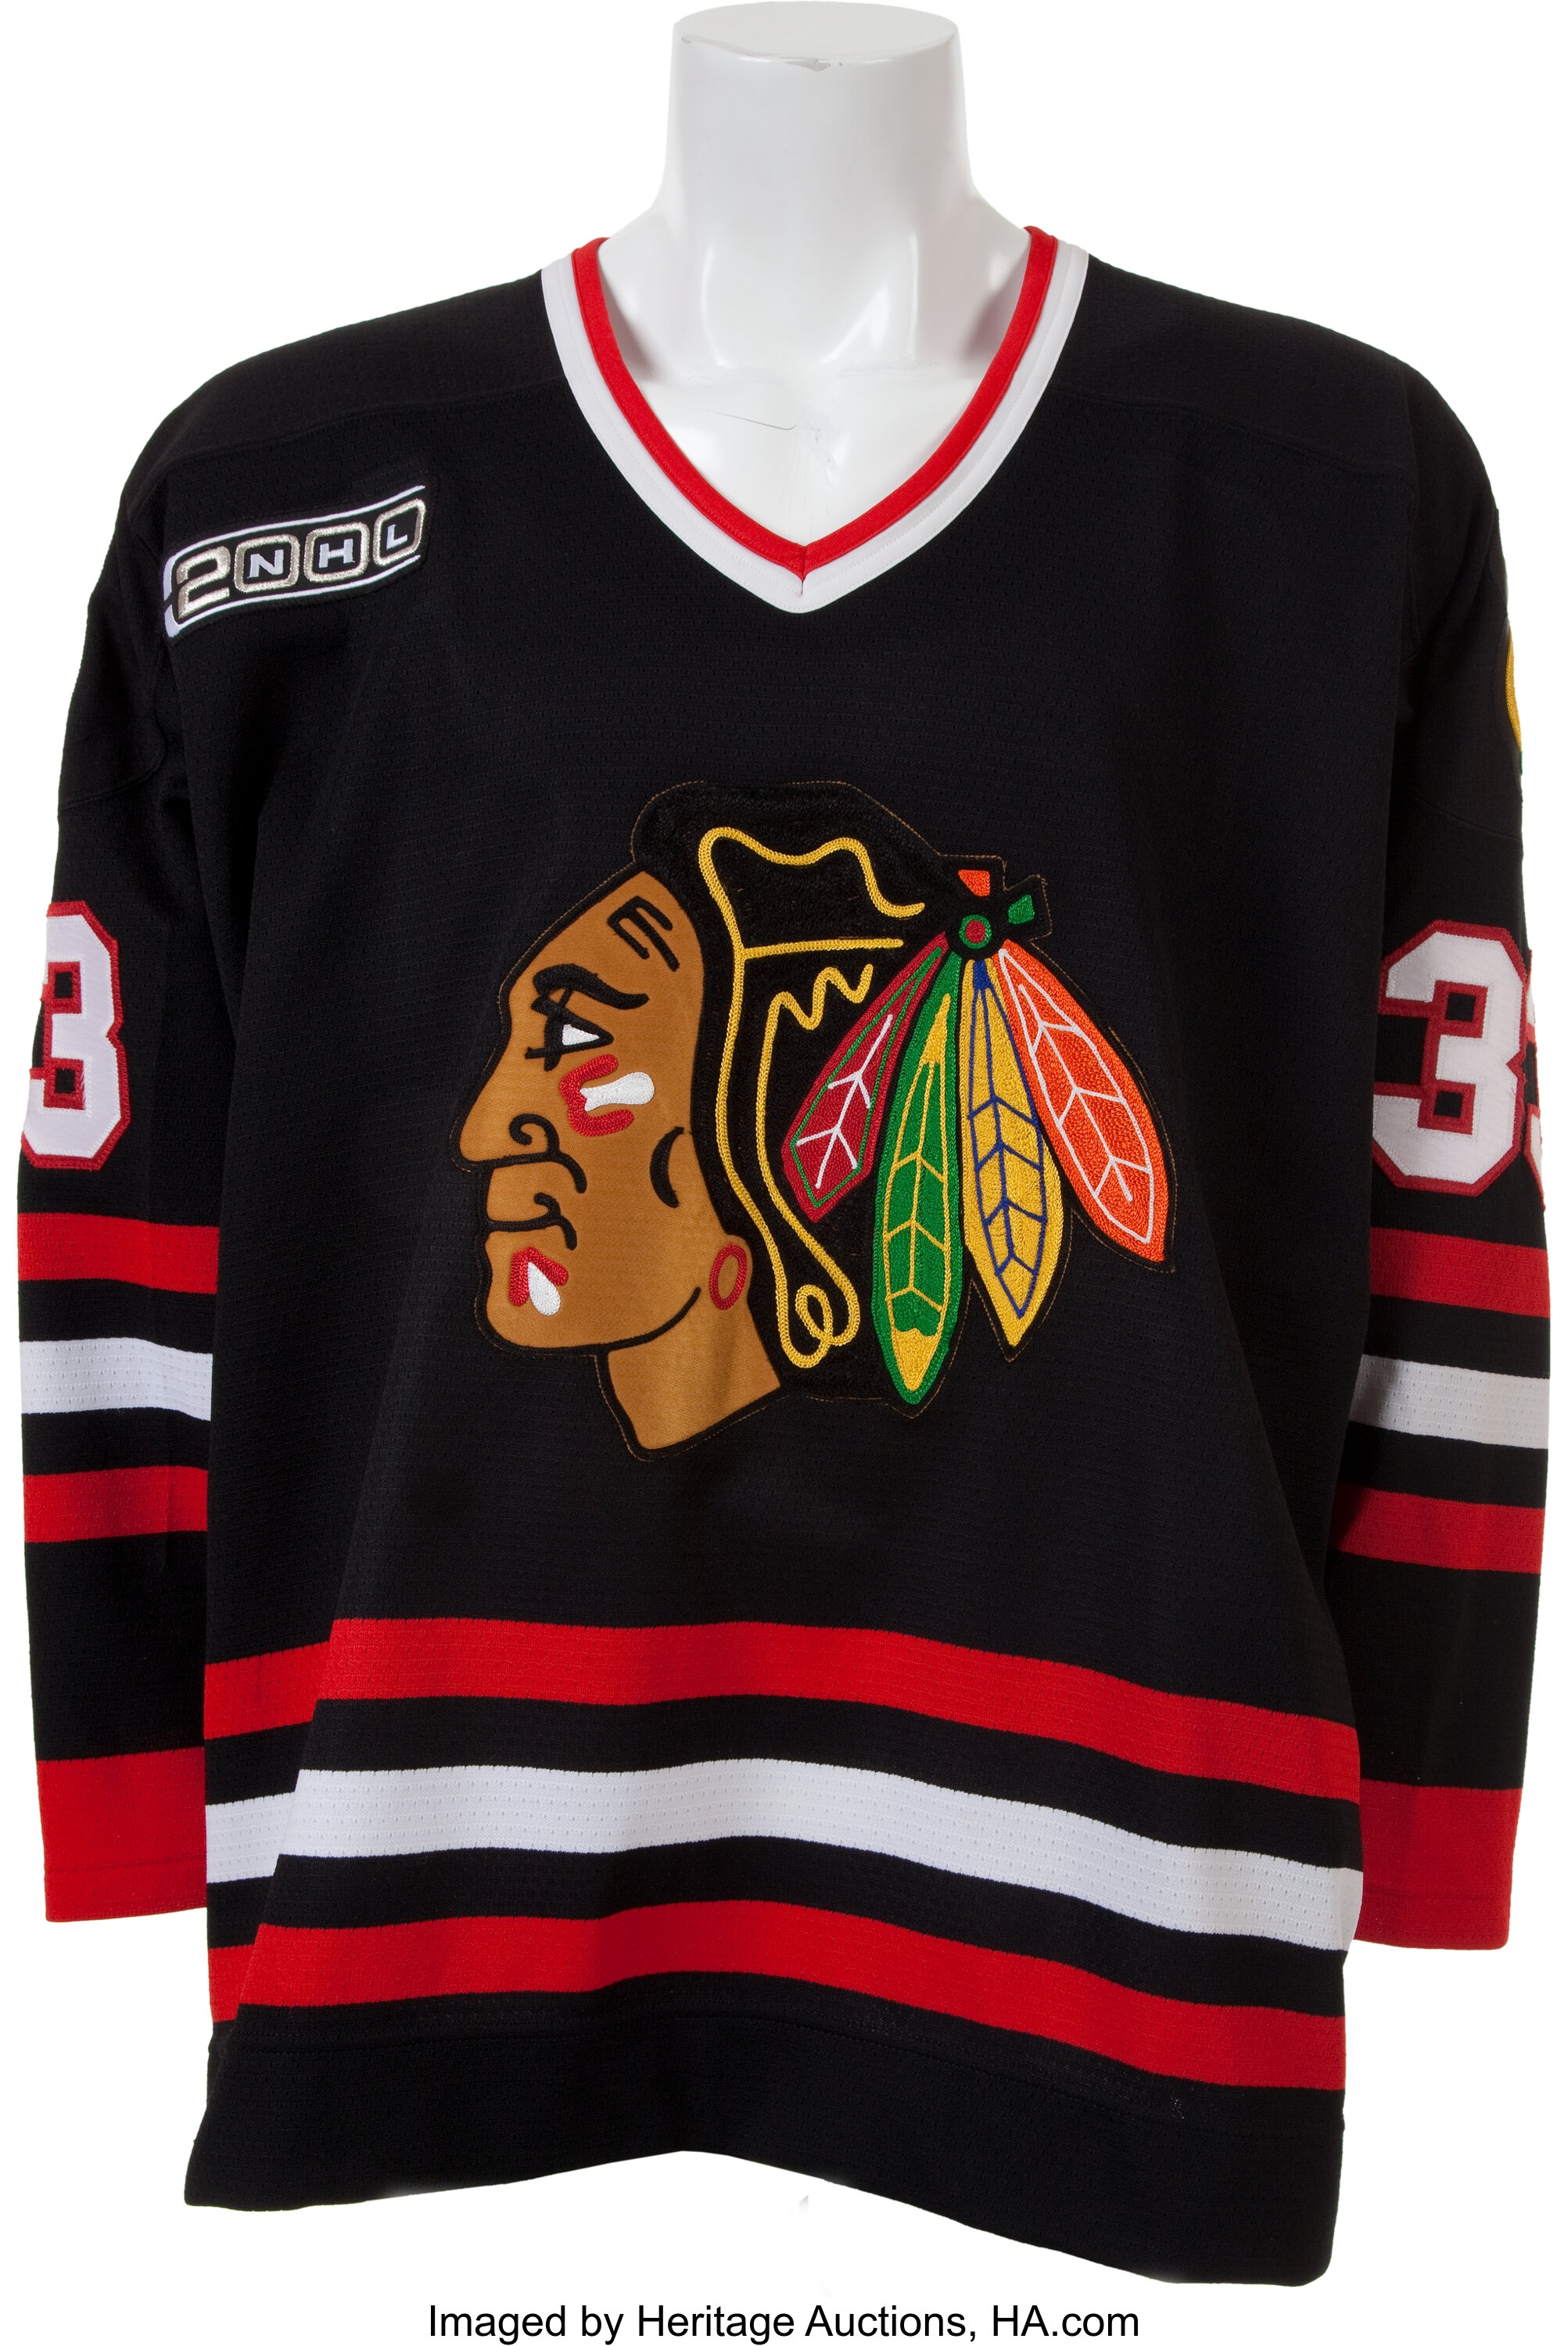 Chicago Blackhawks Game Used NHL Jerseys for sale